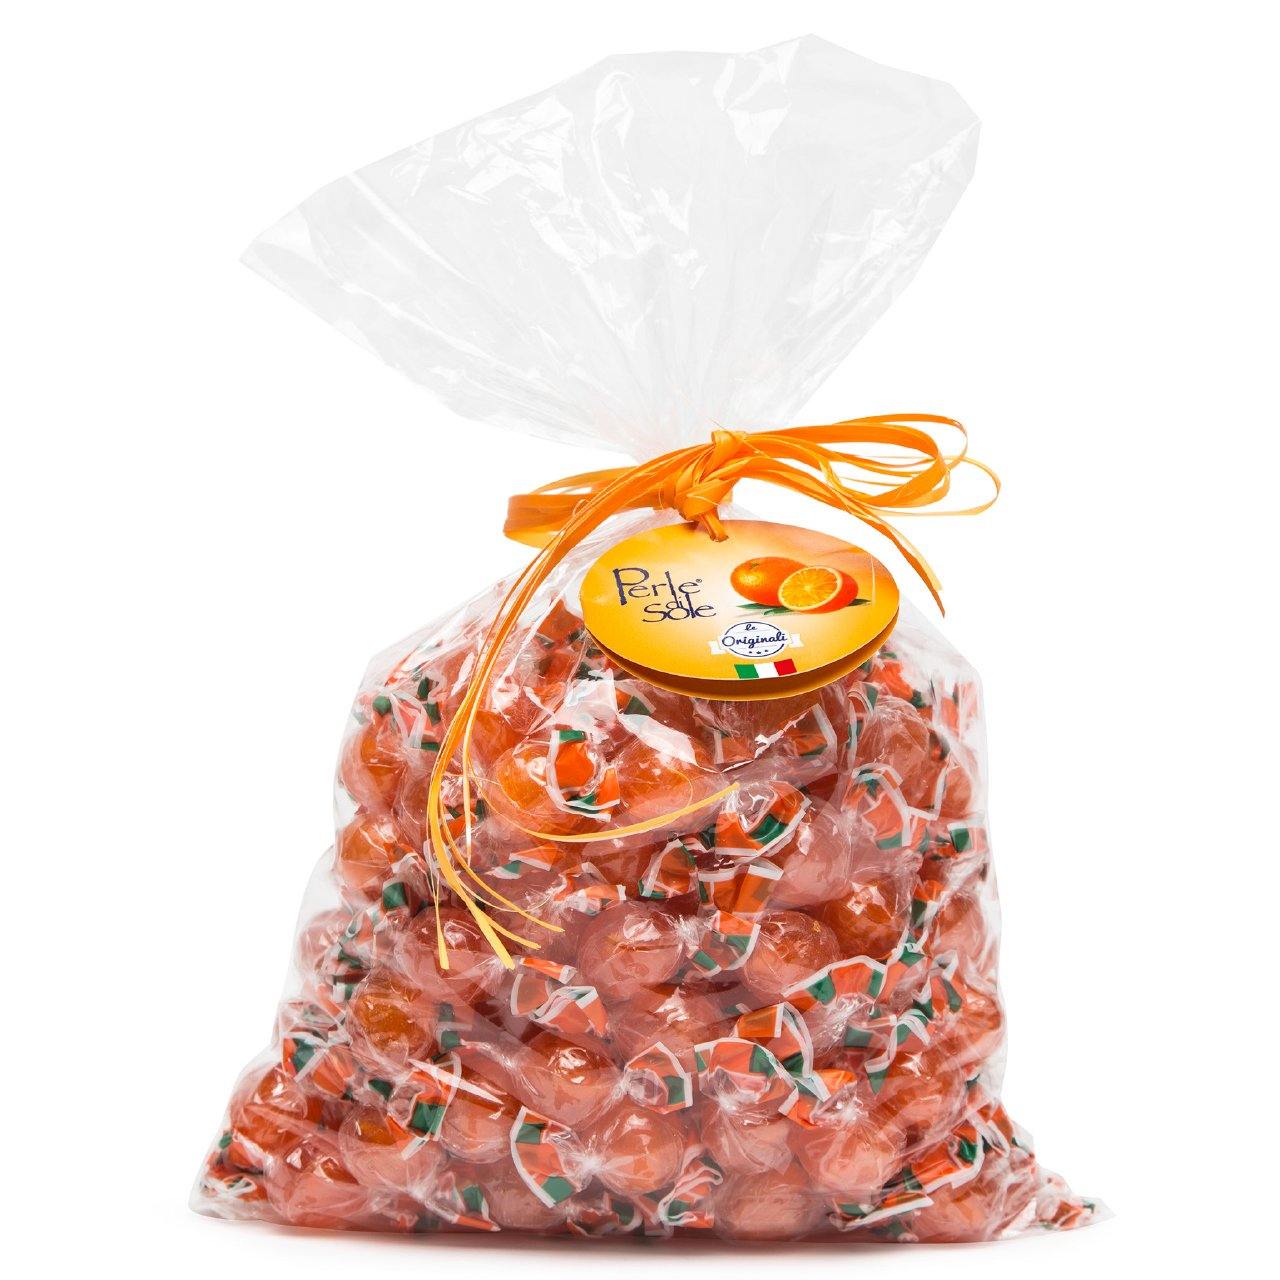 Perle di Sole Amalfi Orange Drops Hard Candies, 35.3 oz